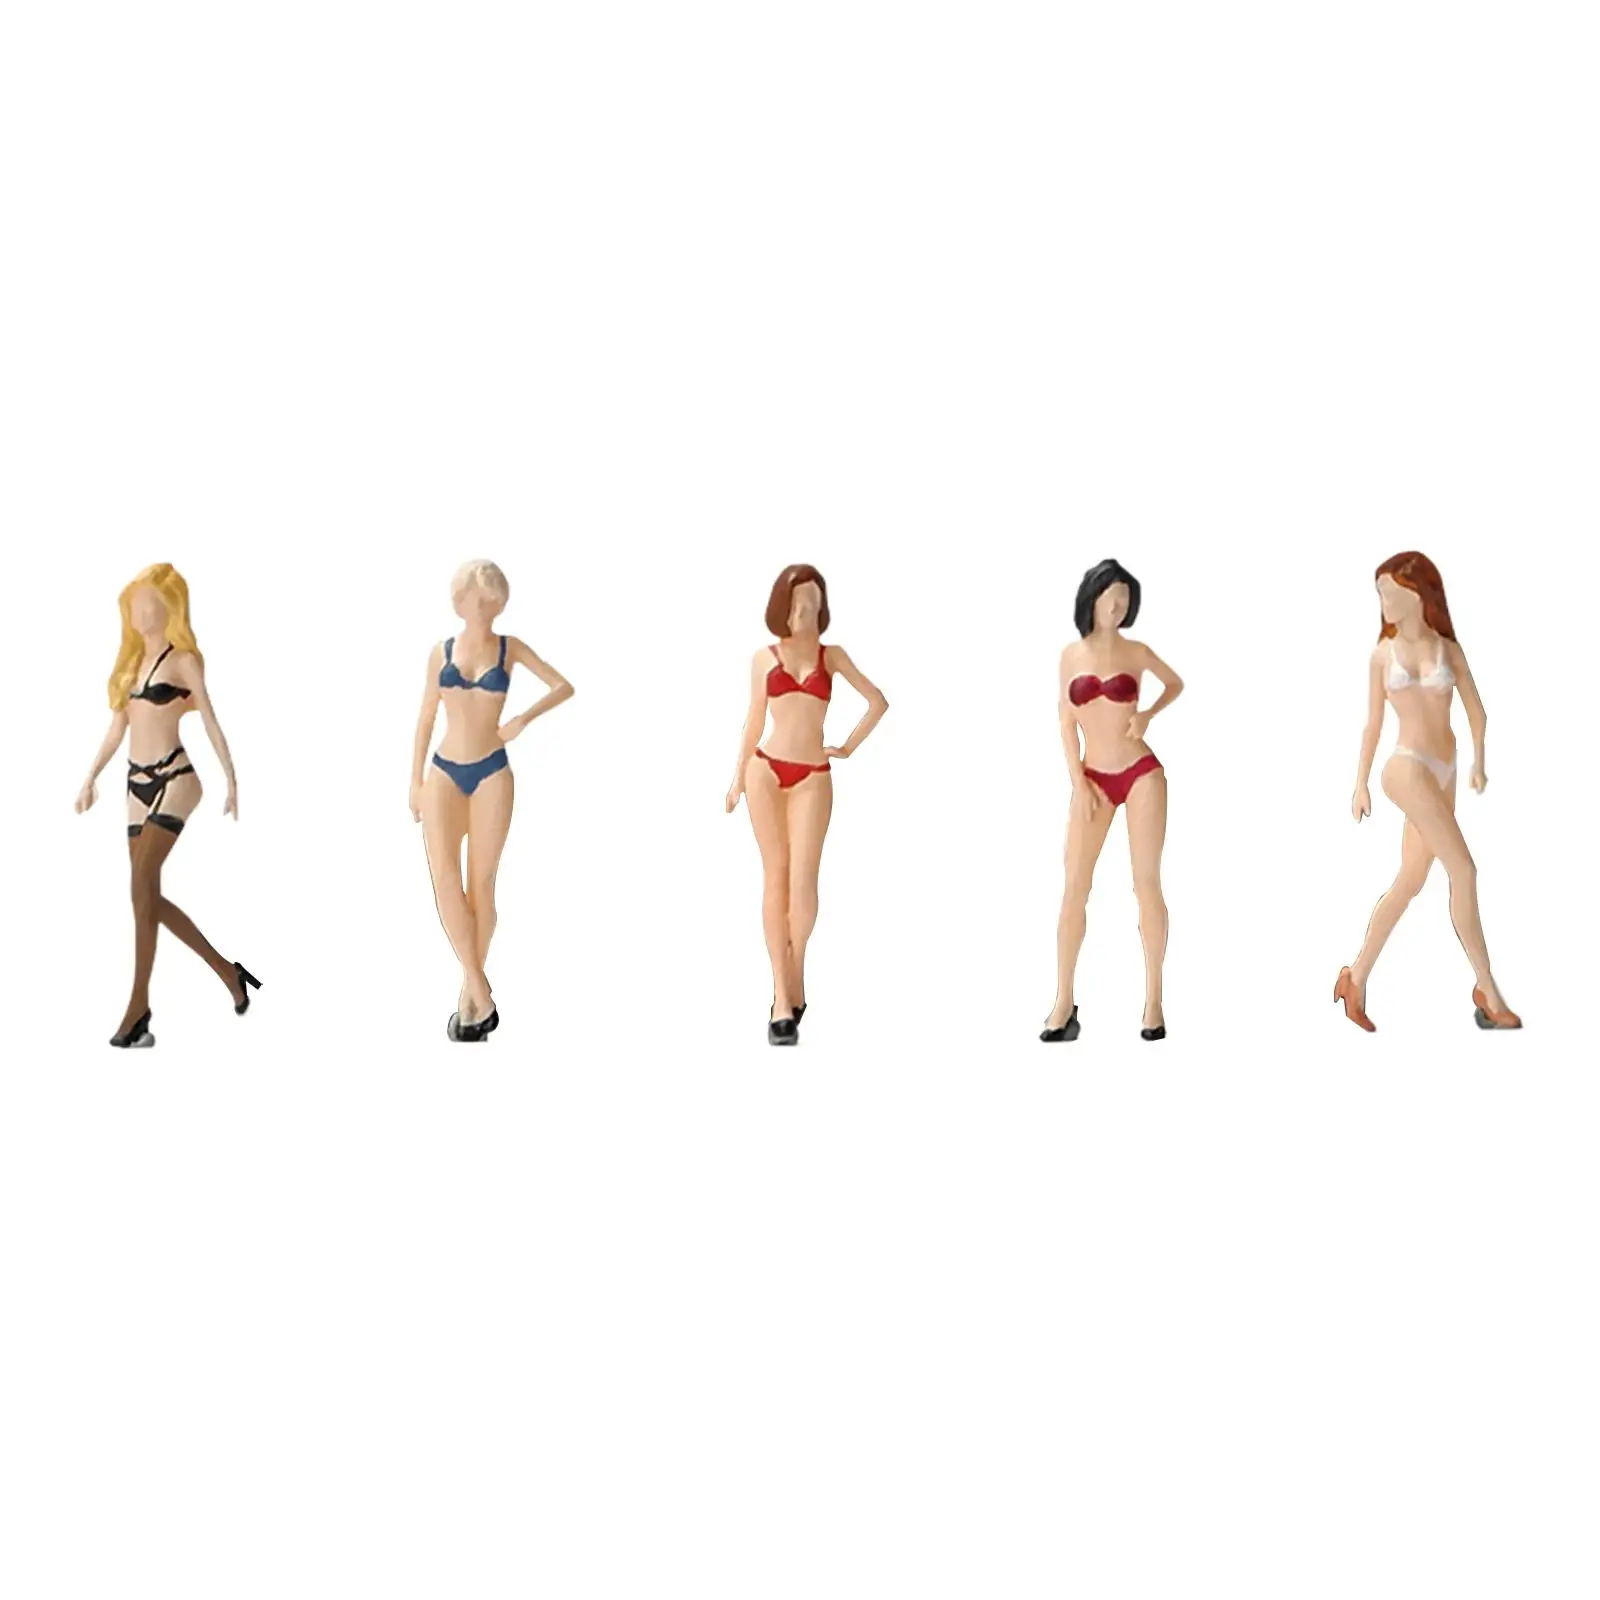 1/64 Scale Miniature Model Figures Ornament Miniature People Model 1/64 Female Models Figurine for DIY Scene DIY Projects Layout